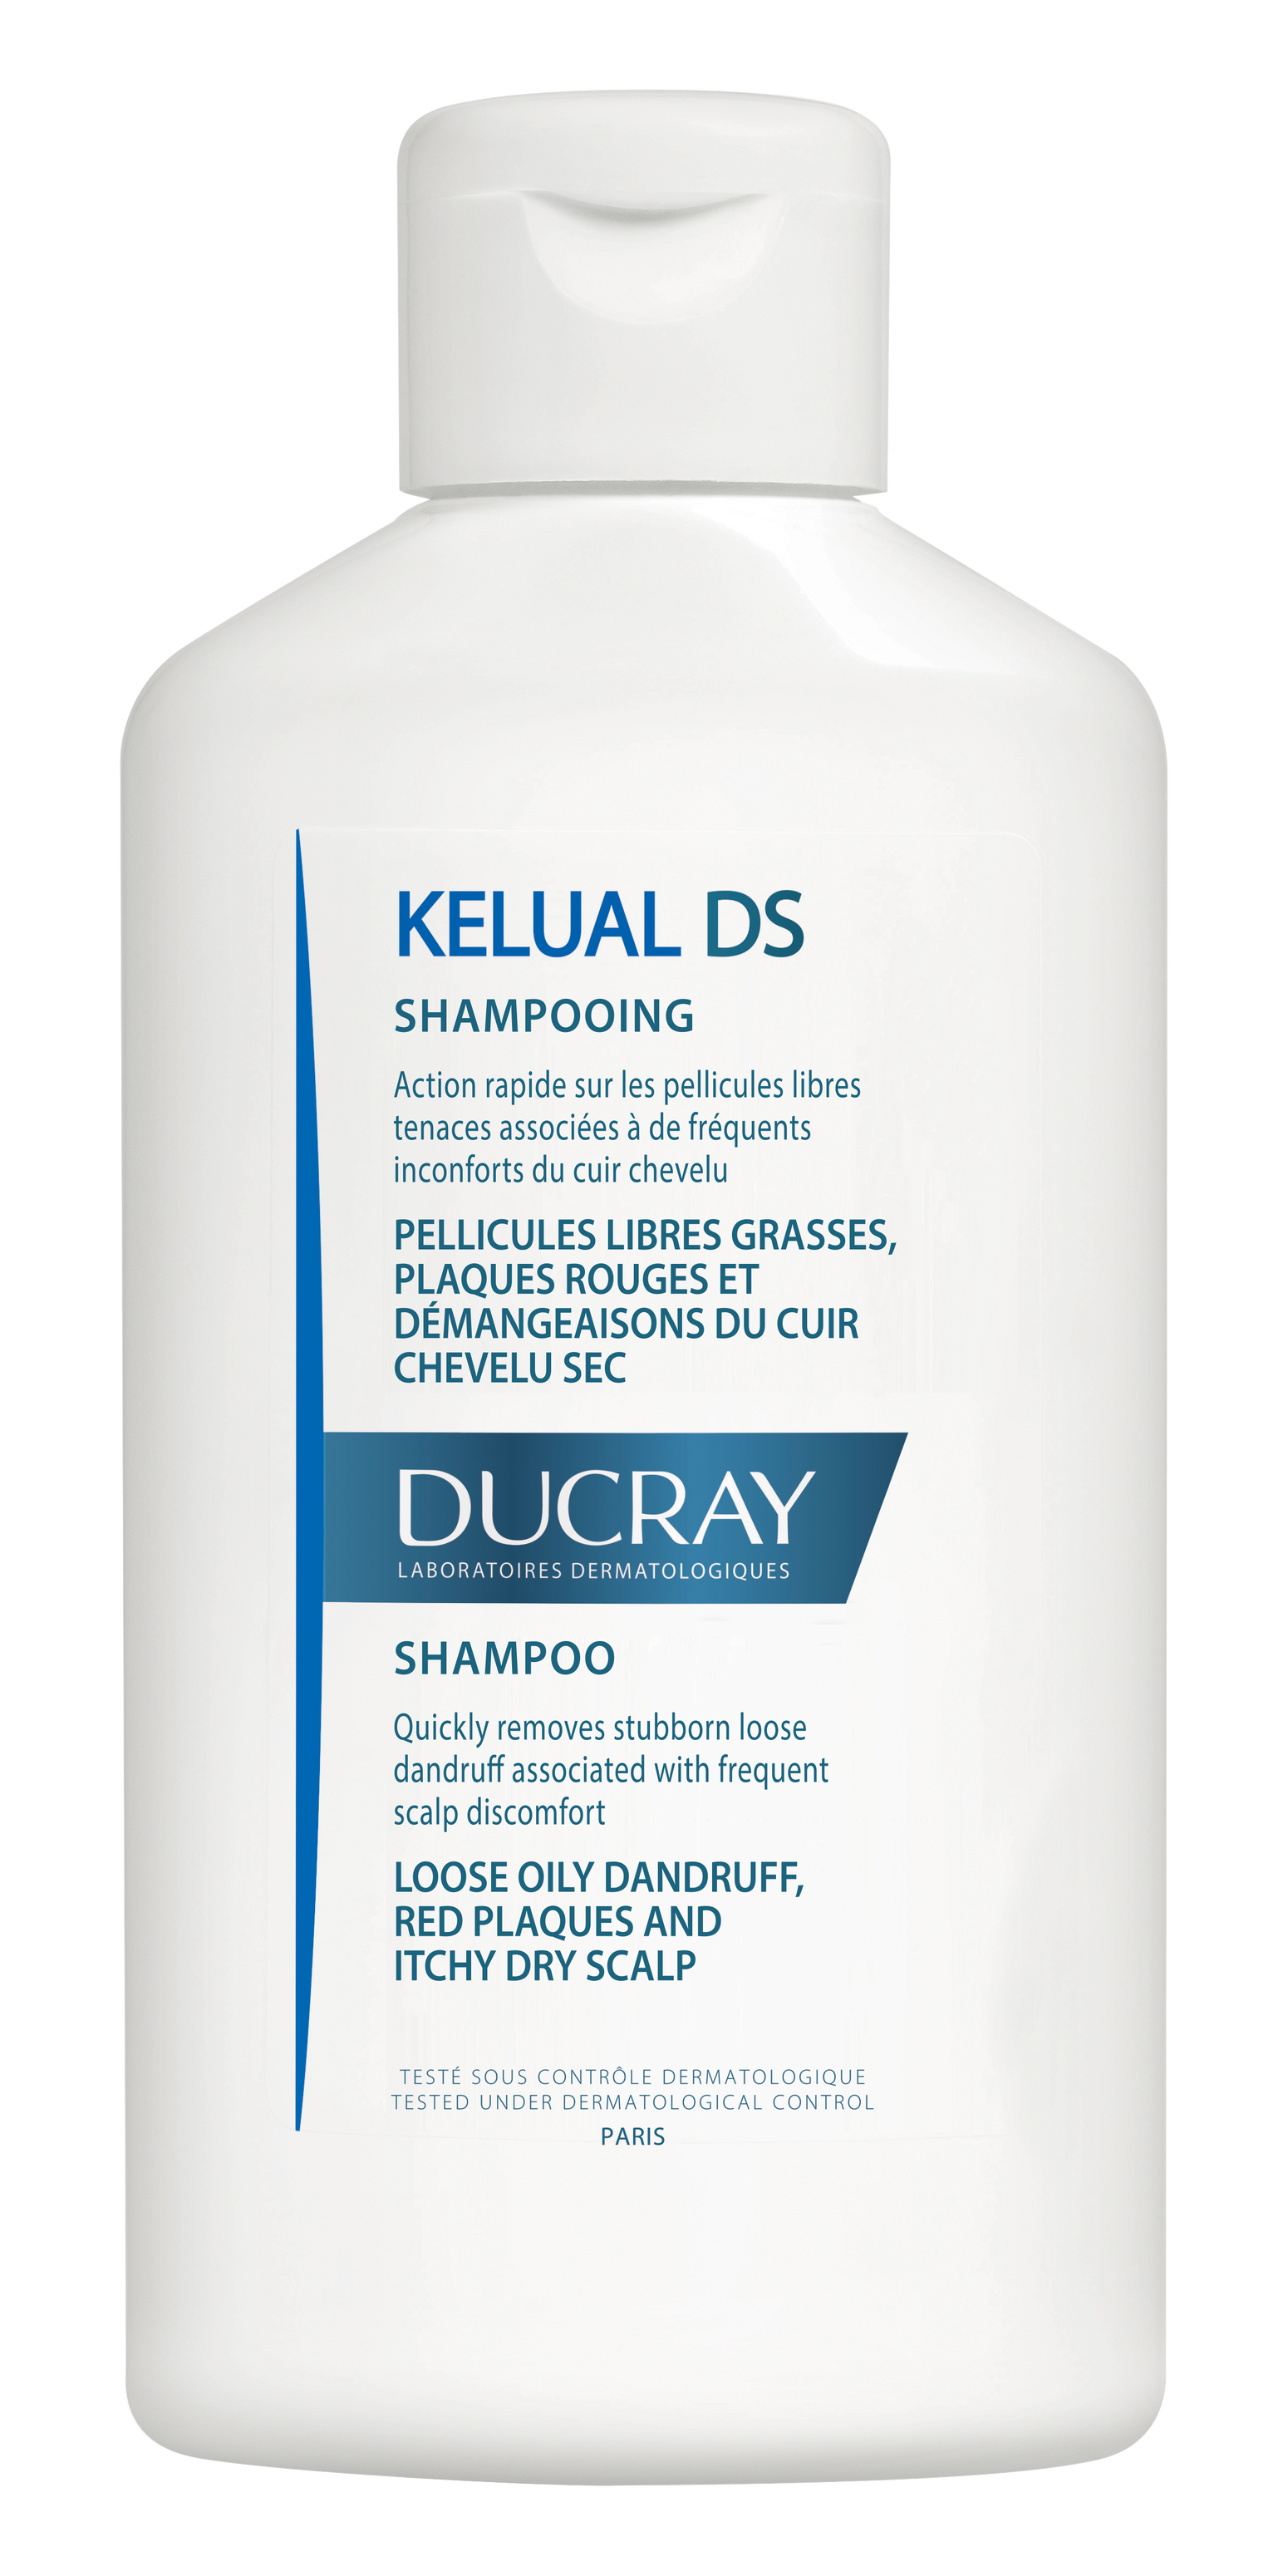 KELUAL DS shampoo | Ducray